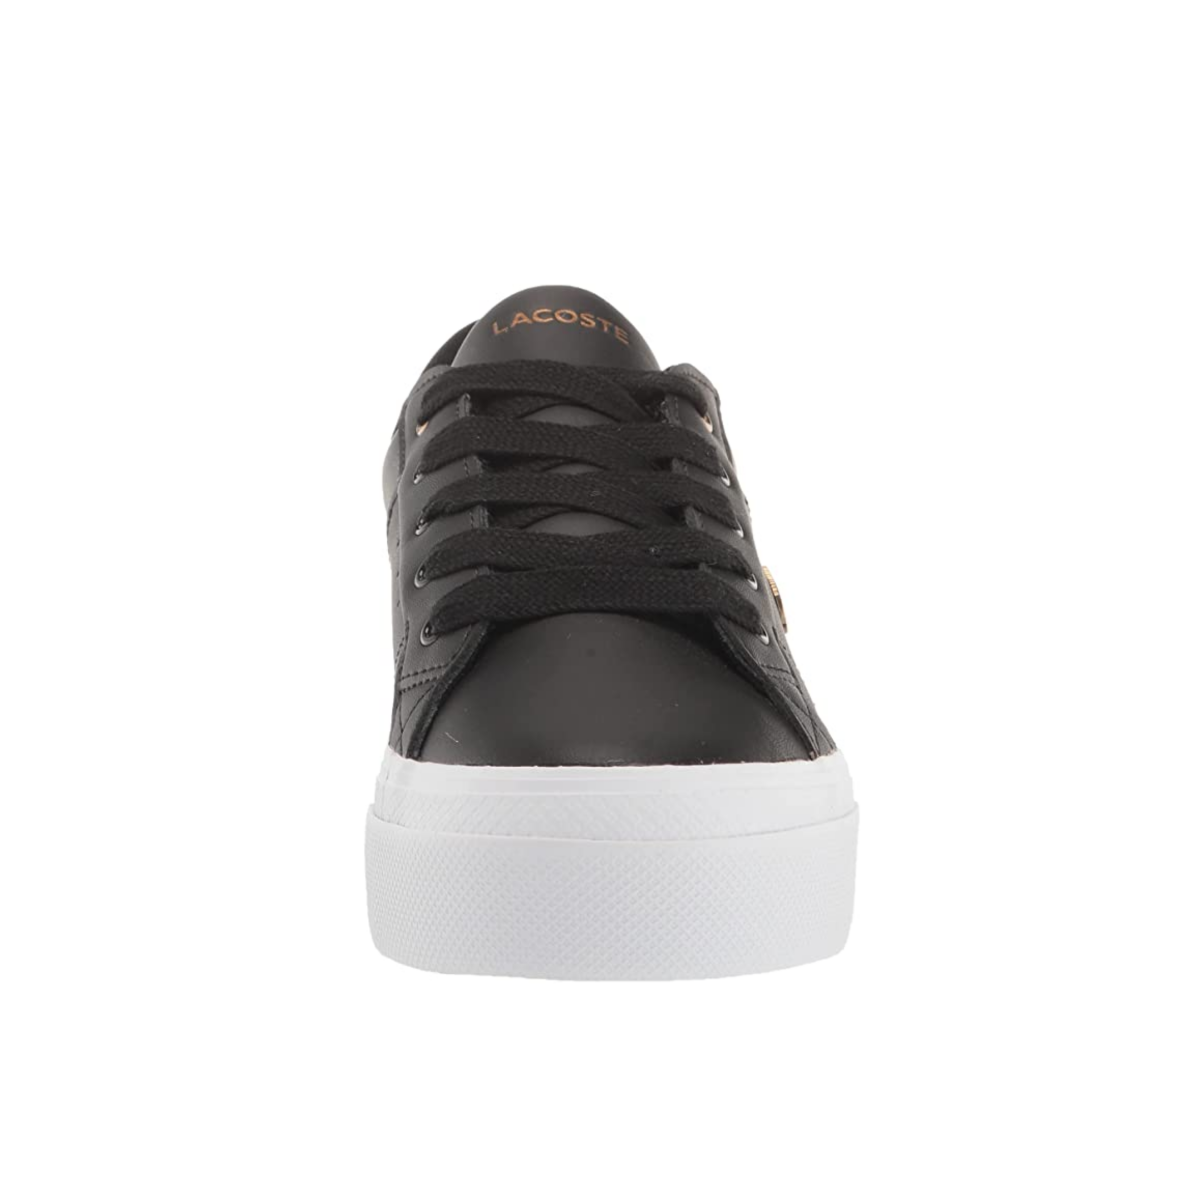 LACOSTE 7-45CFA0013312 ZIANE PLATFORM WMN'S (Medium) Black/White Leather & Synthetic Lifestyle Shoes